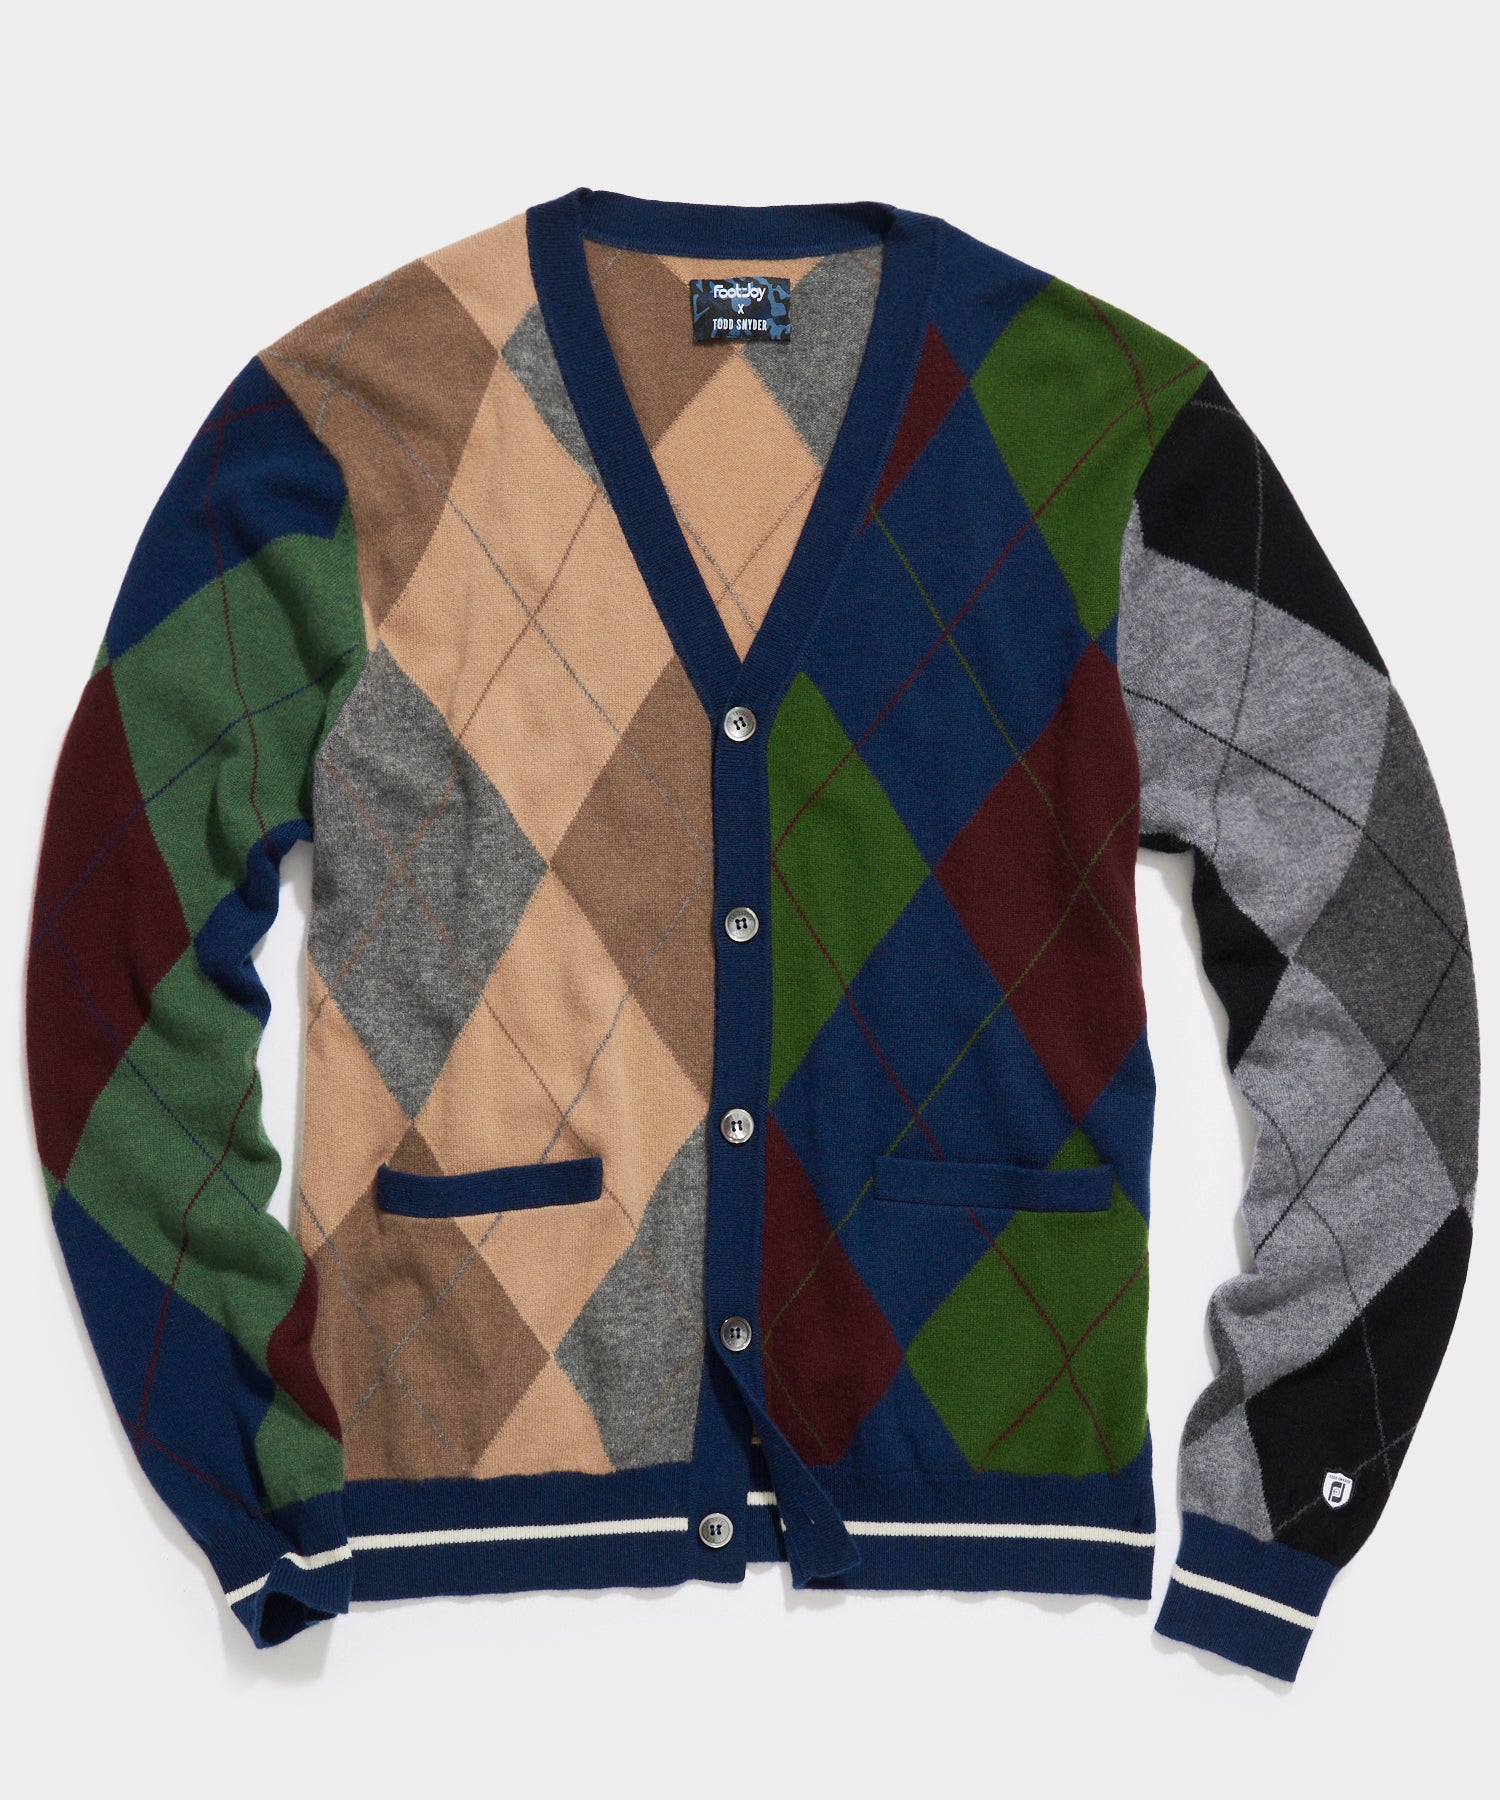 FJ x Todd Snyder Golf Bag Print Sweater Vest - FootJoy